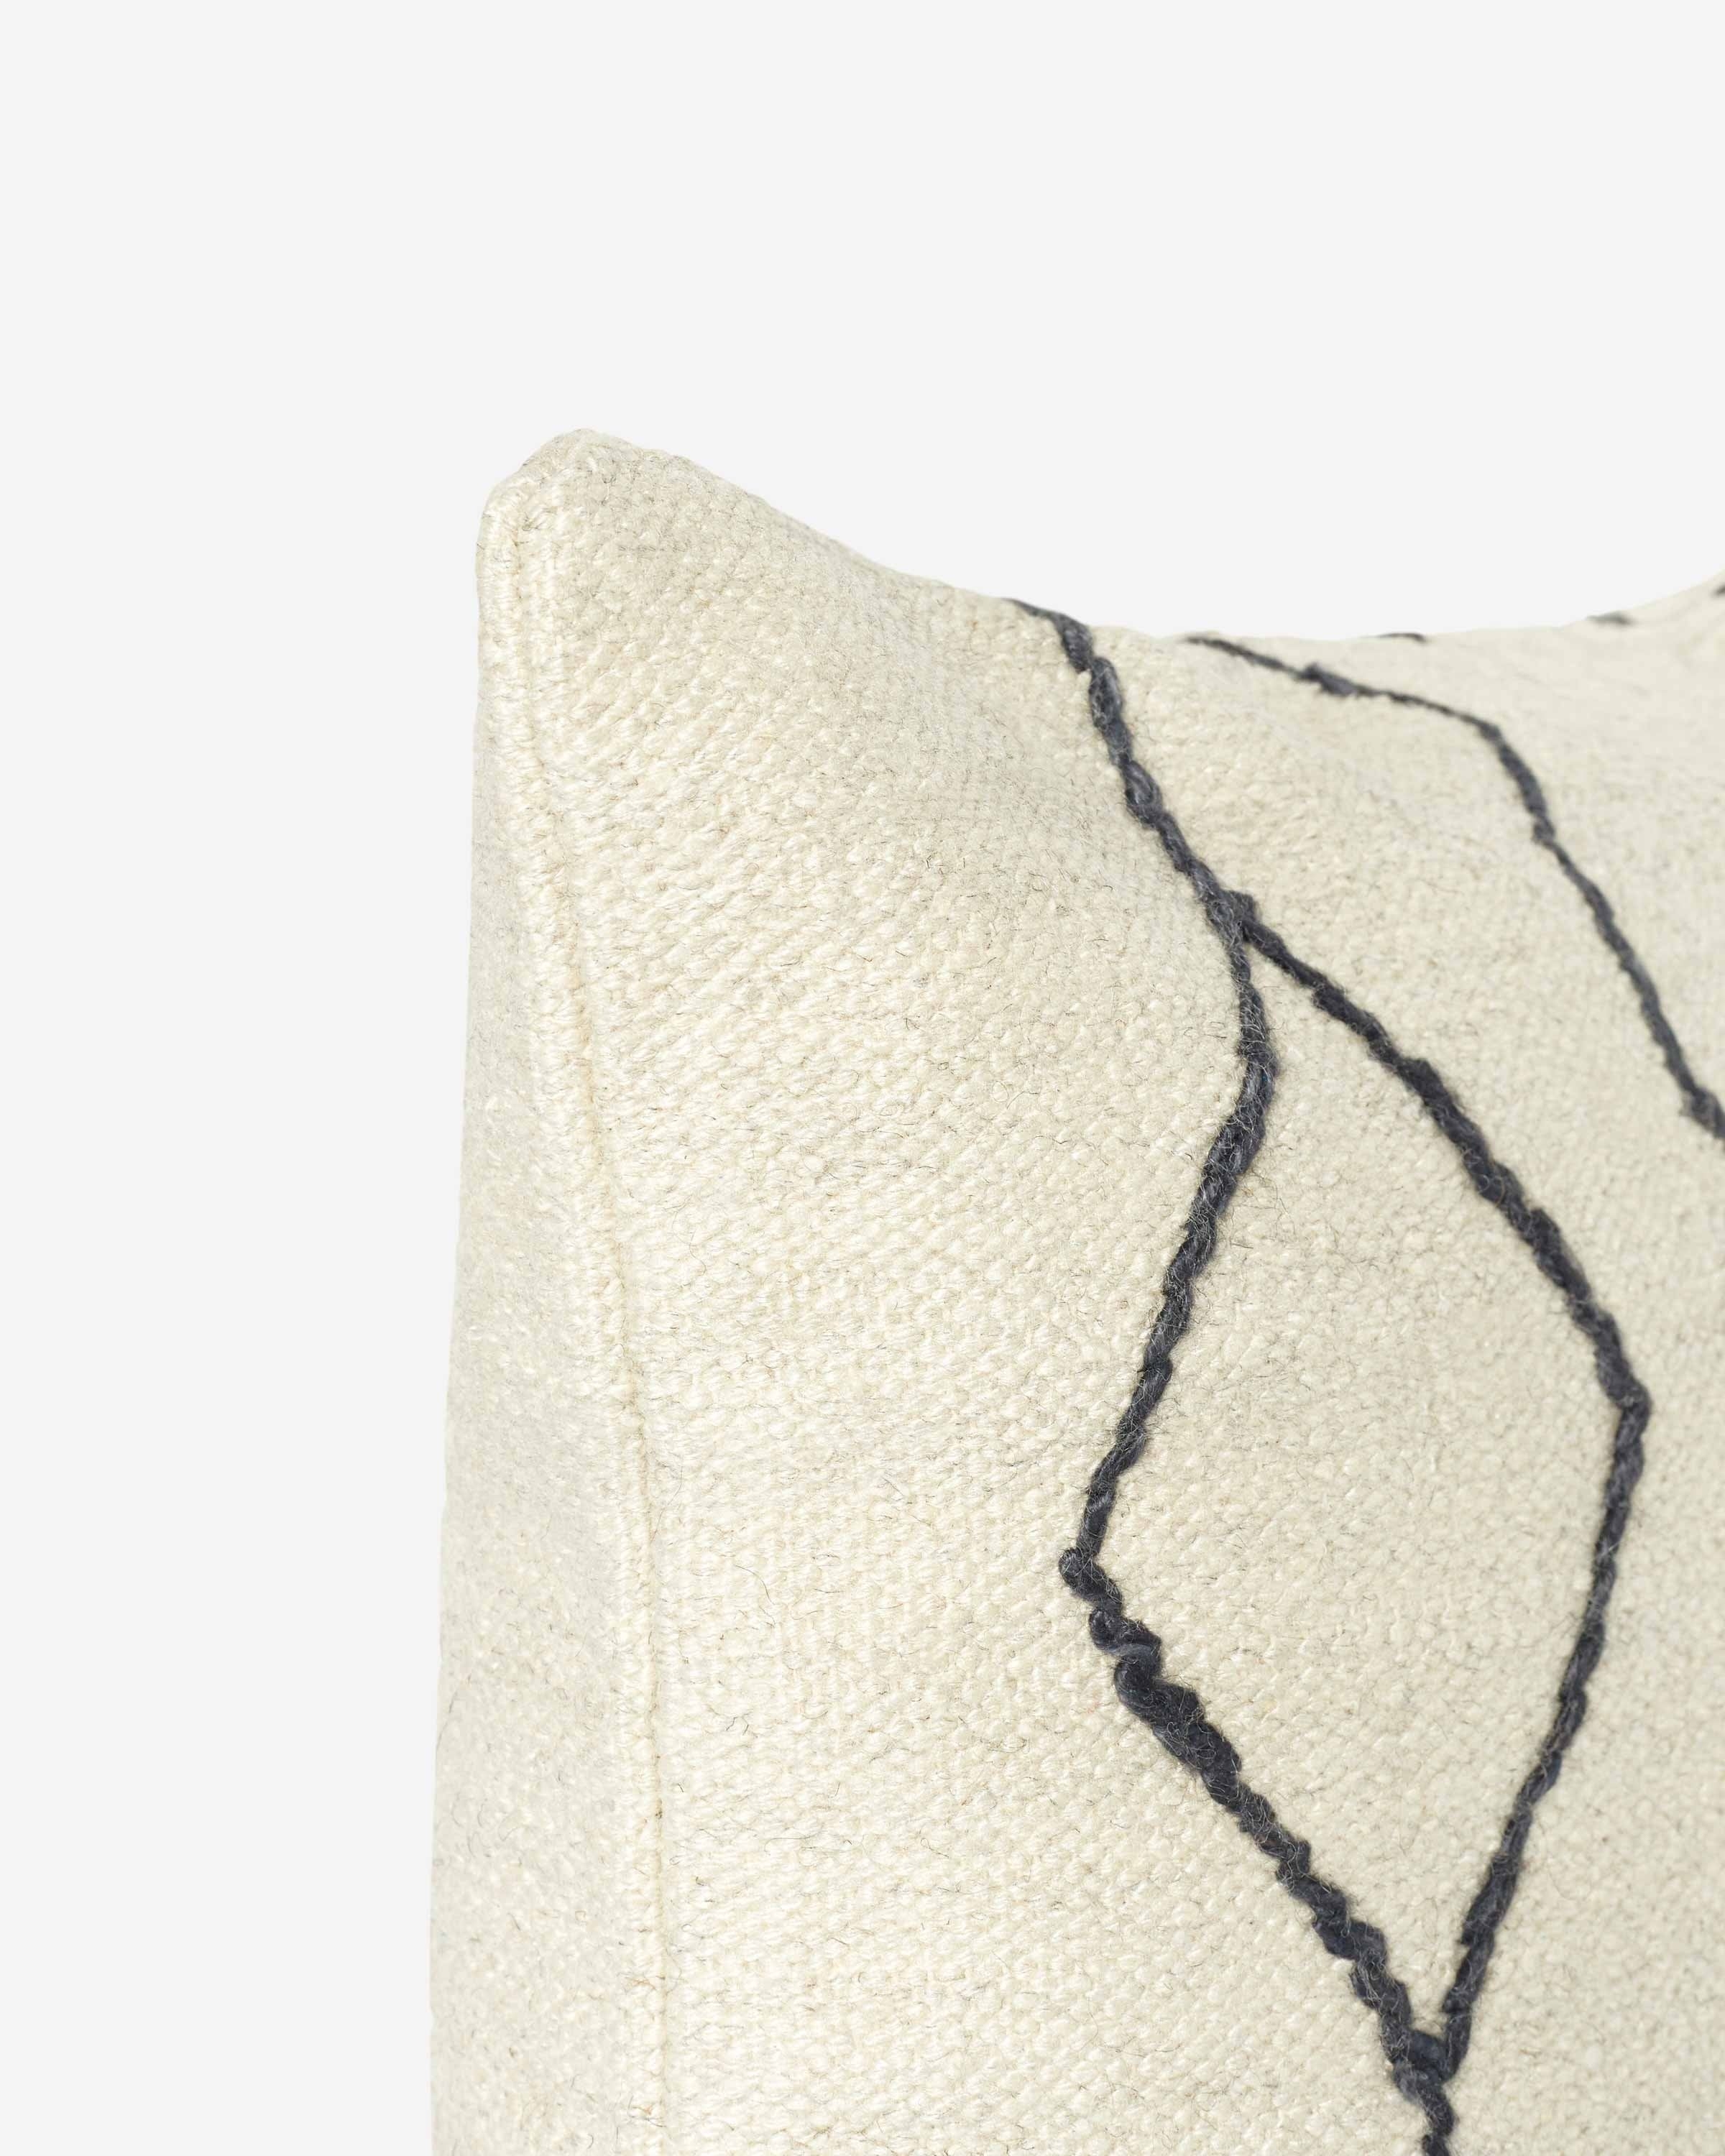 Moroccan Flatweave Pillow By Sarah Sherman Samuel - Black and Natural / 12" x 20" - Image 4